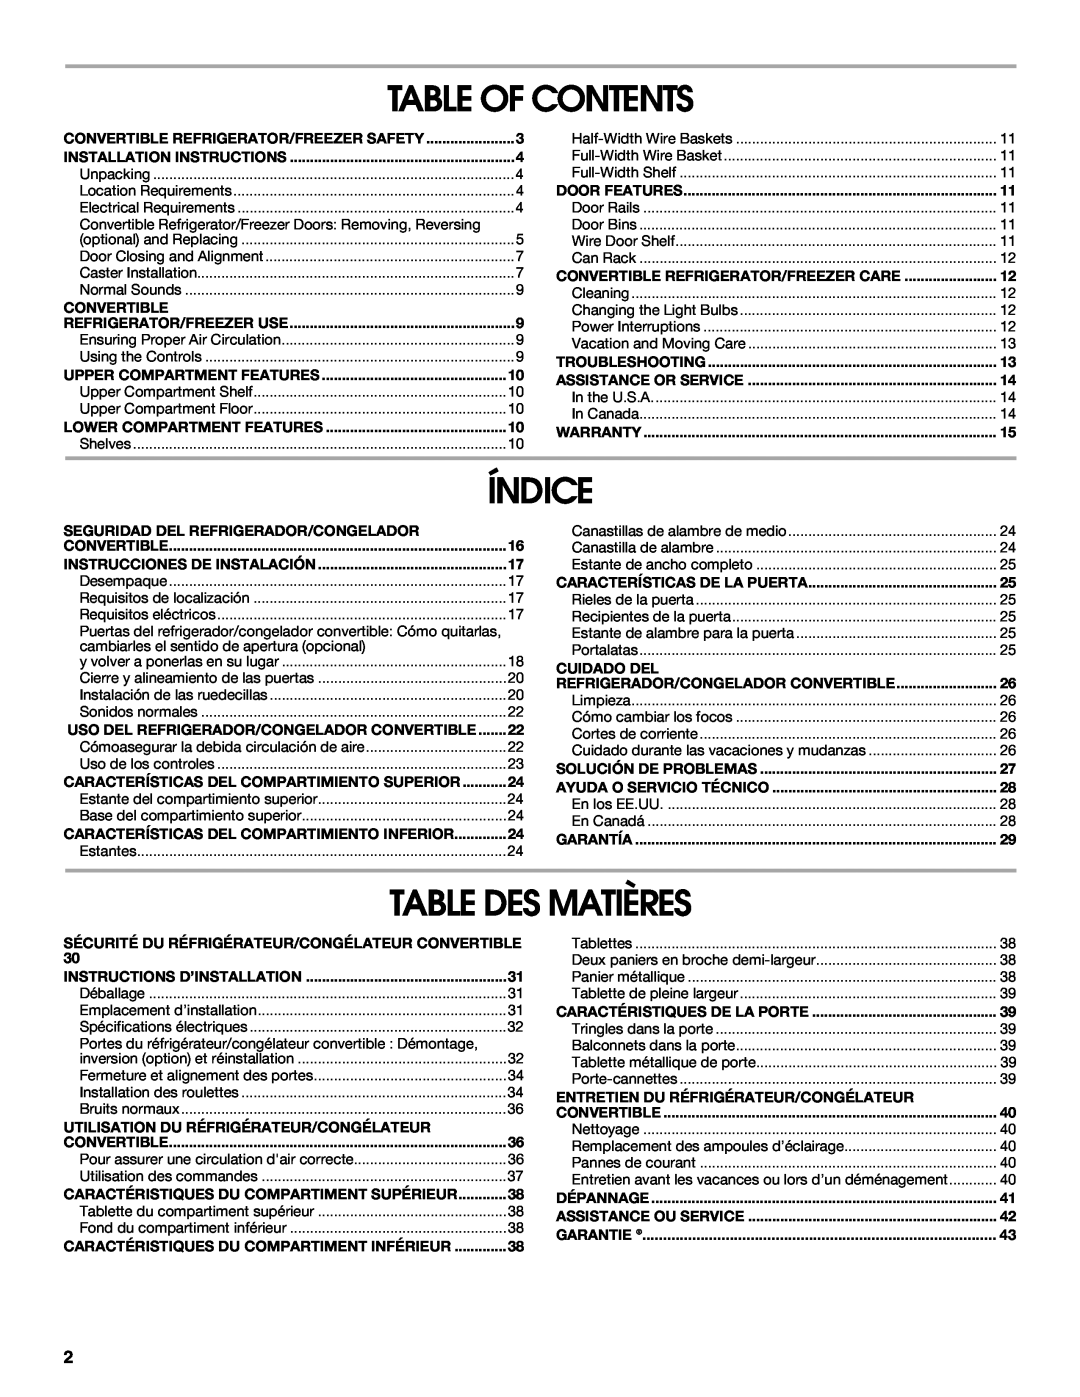 Whirlpool GAFZ21XXMK00 manual Table Of Contents, Índice, Table Des Matières 